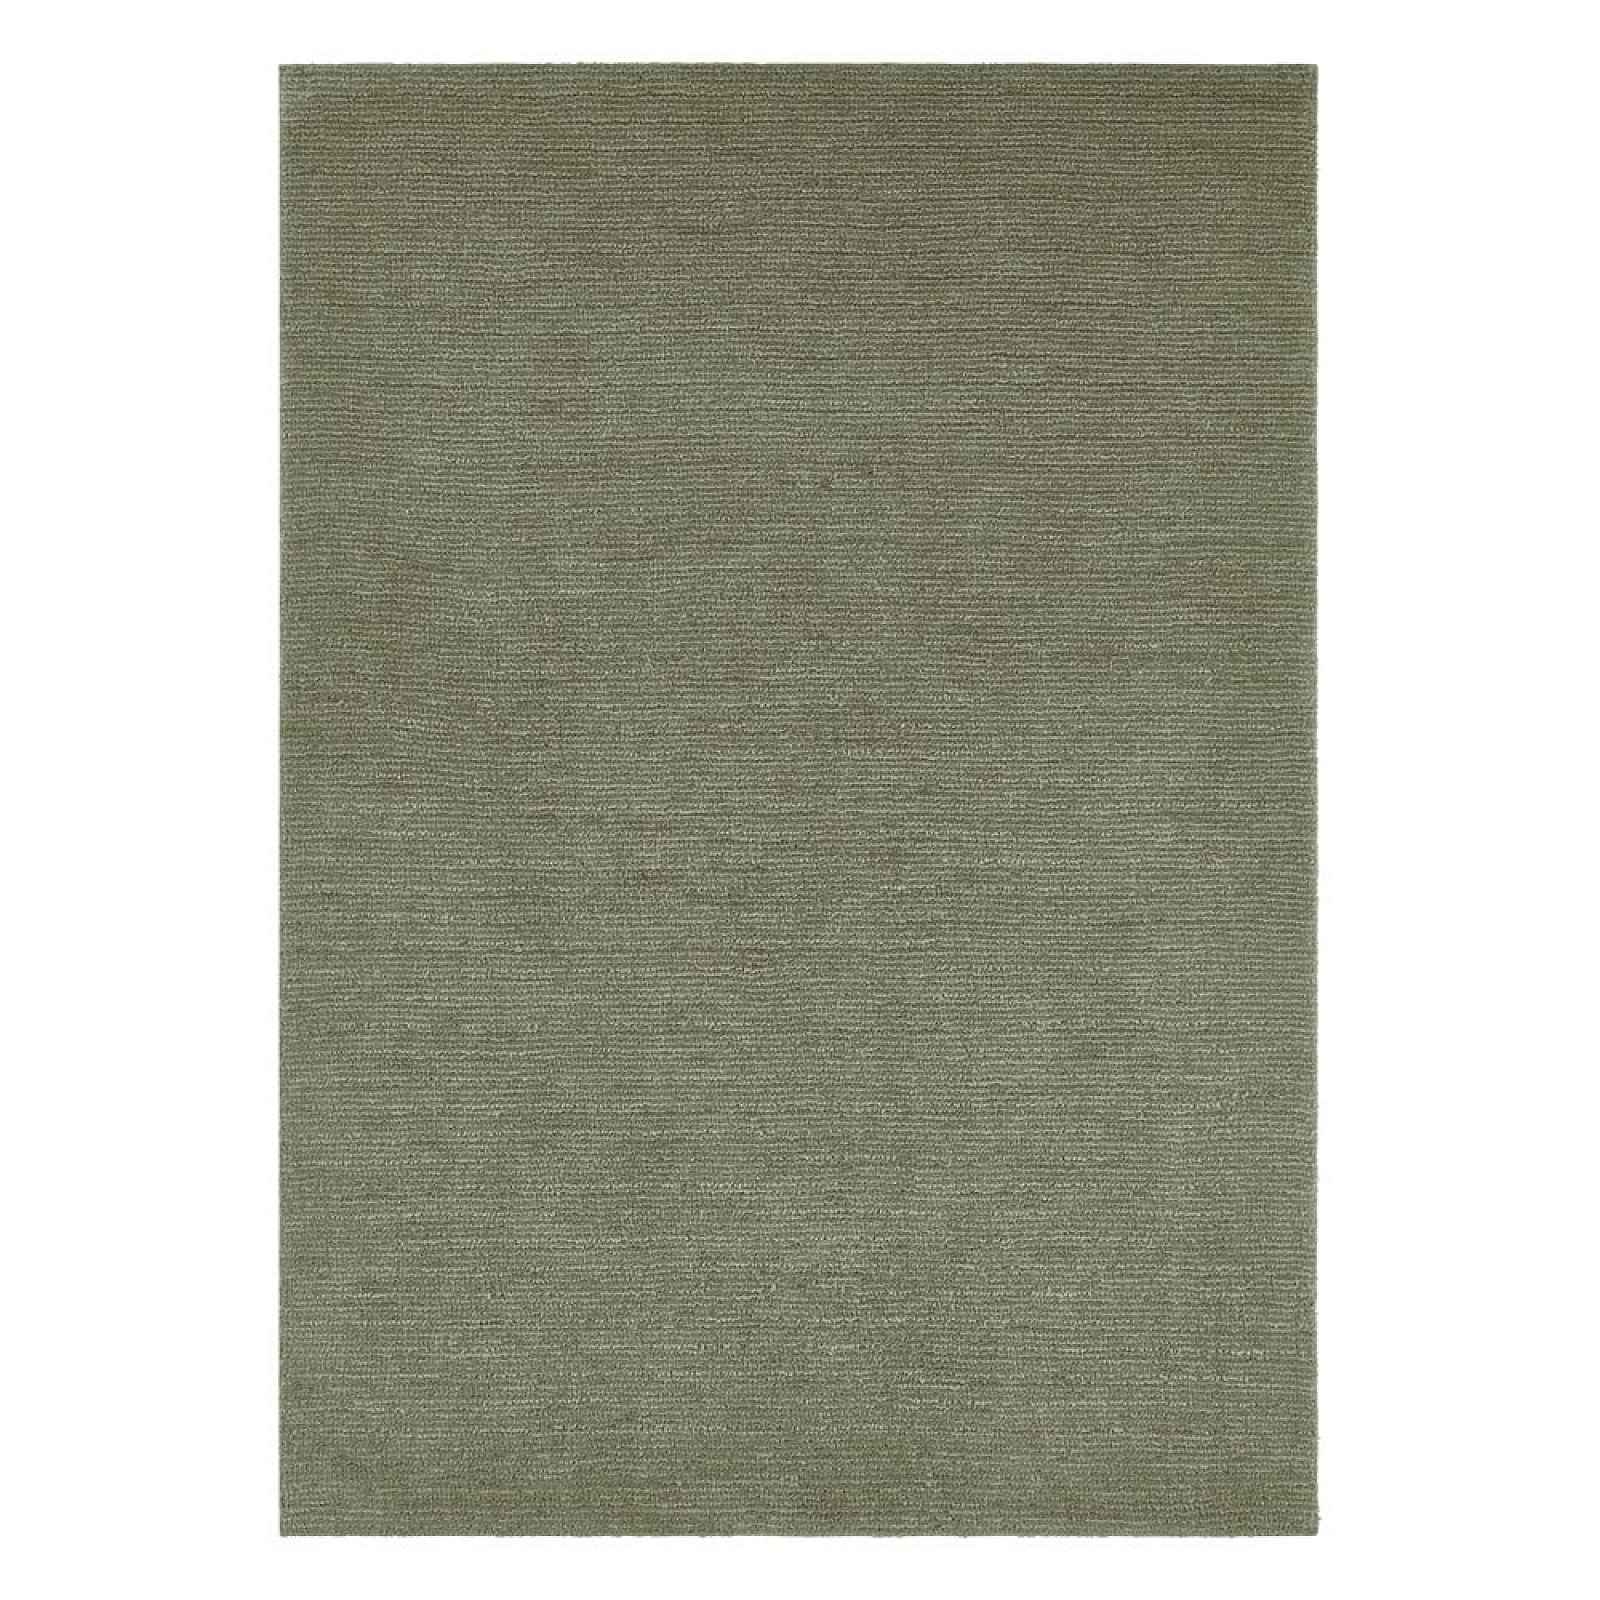 Tmavě zelený koberec Mint Rugs Supersoft, 80 x 150 cm